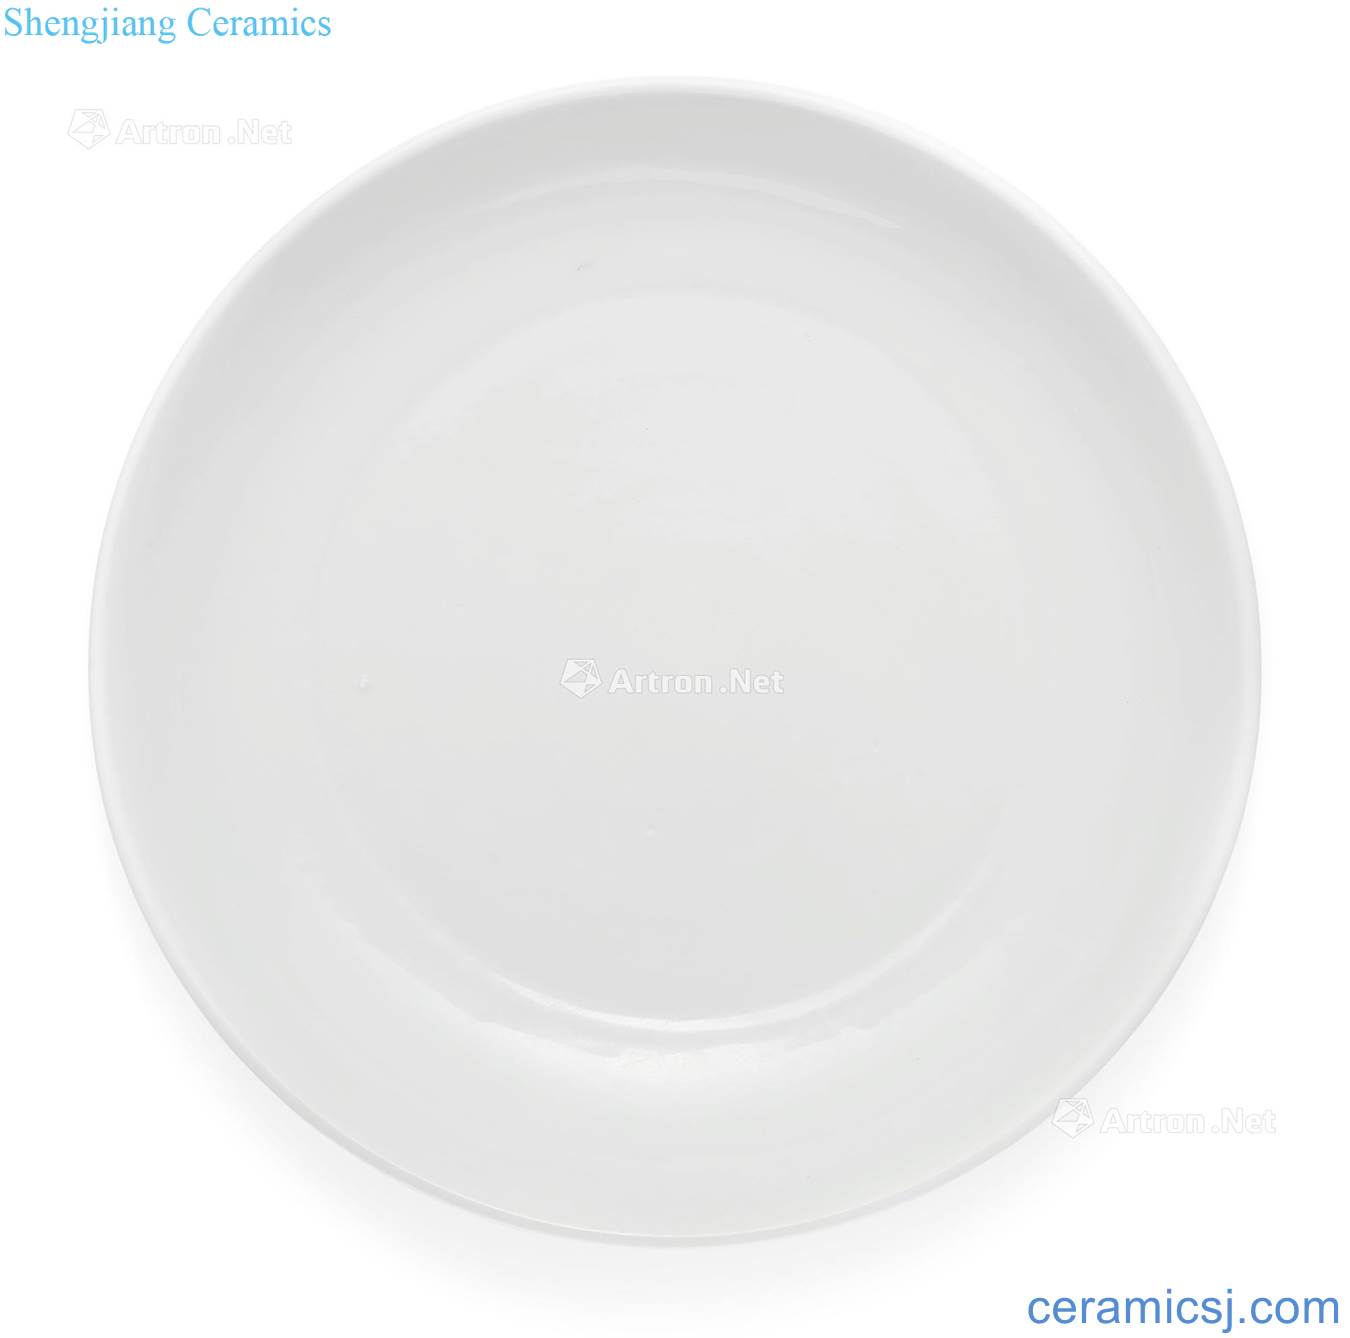 Ming yongle/jintong white glazed plate